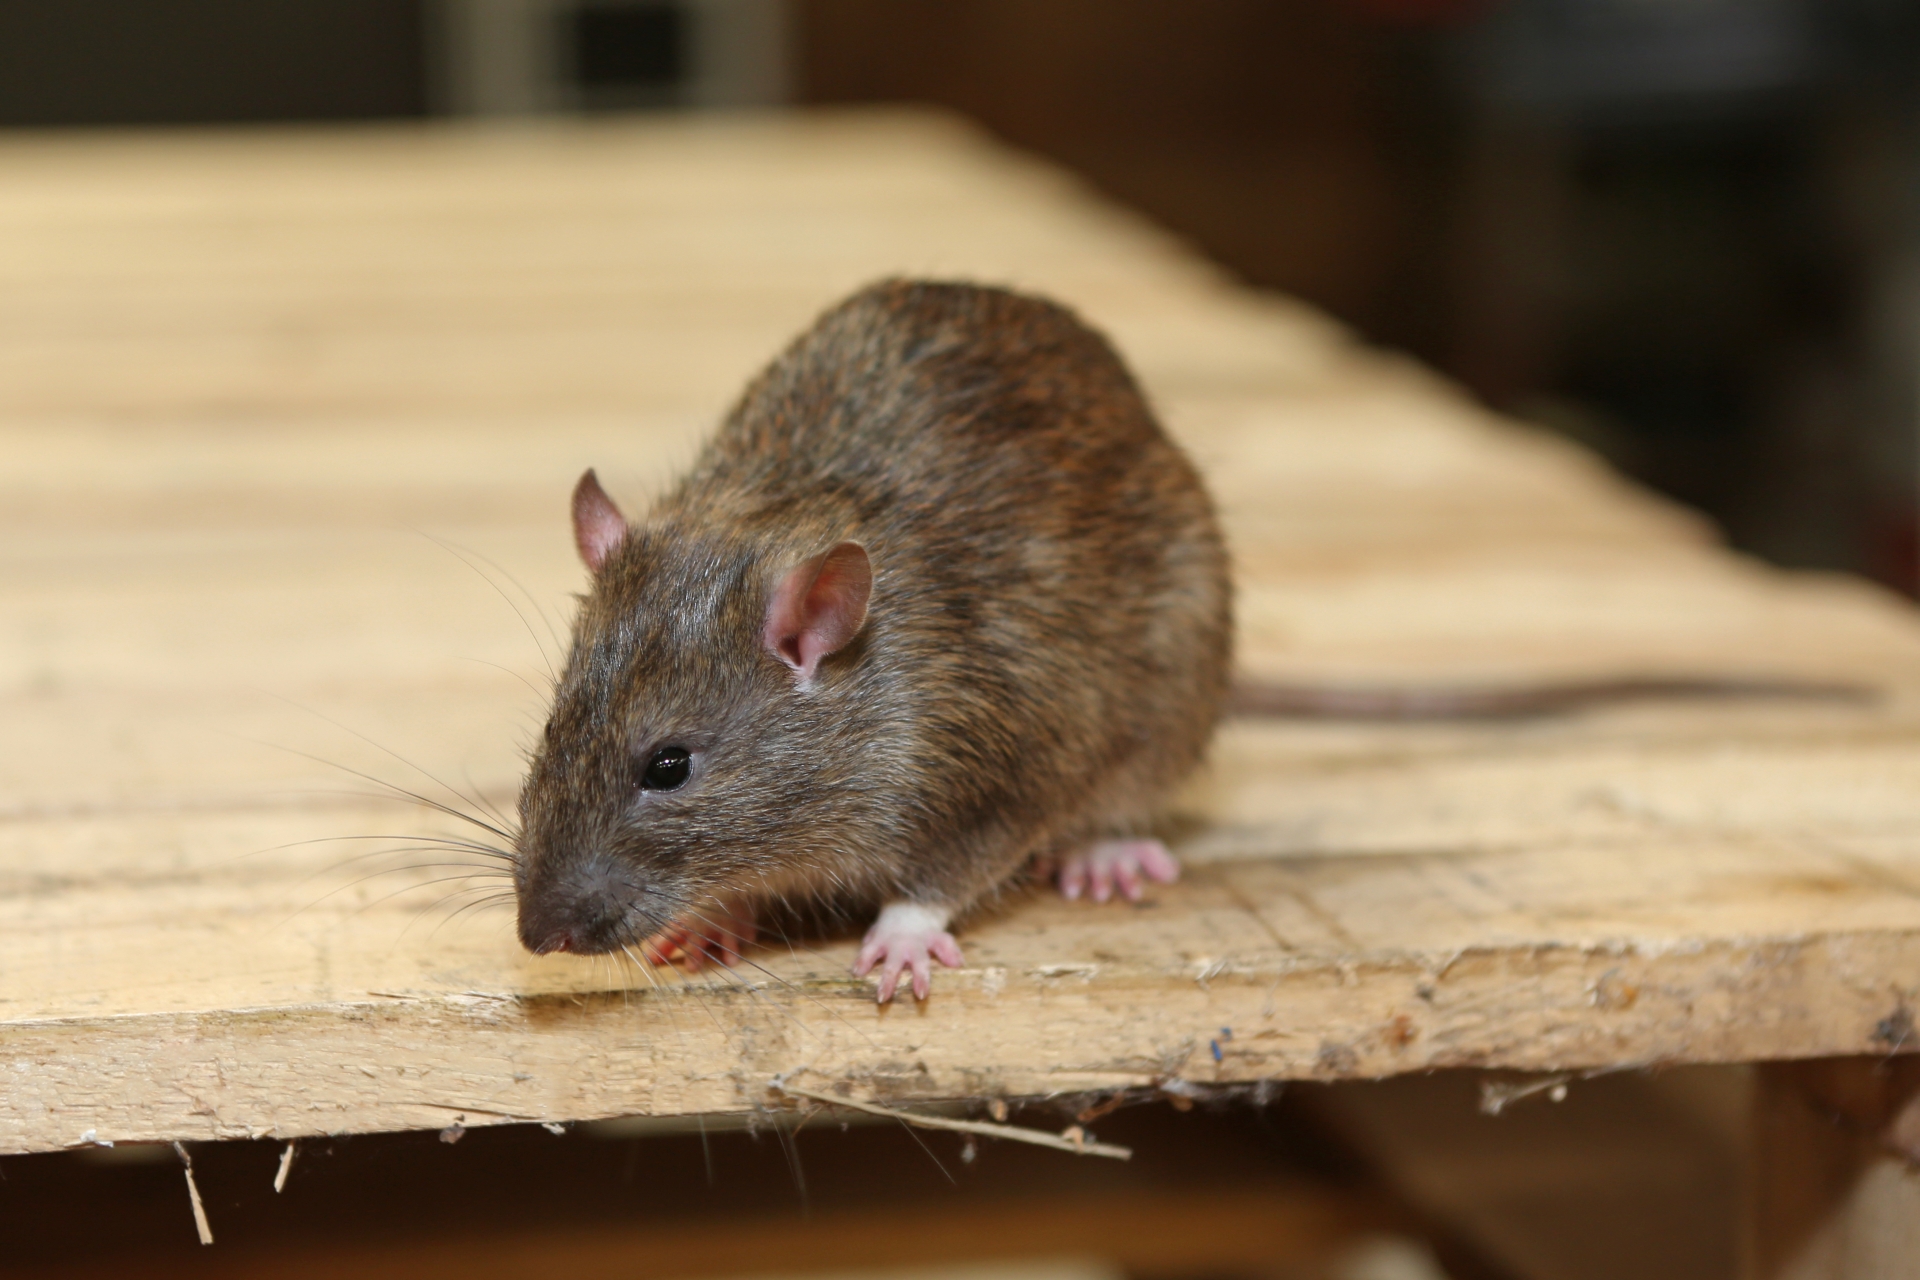 Rat extermination, Pest Control in West Drayton, Harmondsworth, Sipson, UB7. Call Now 020 8166 9746